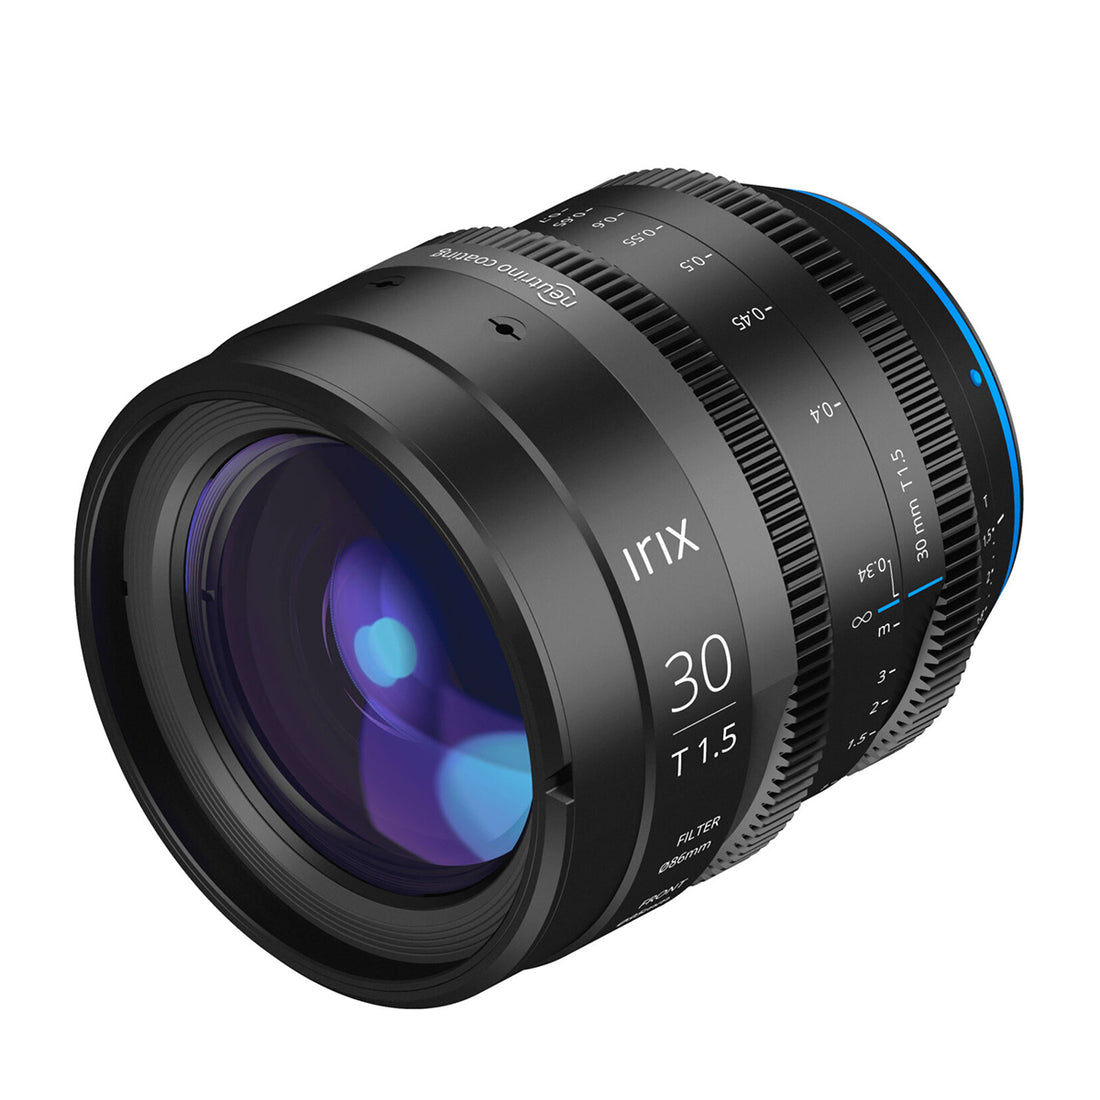 Irix 30mm T1.5 Manual Focus PRO Cinema Lens for Sony E-Mount Cameras - Metric Markings